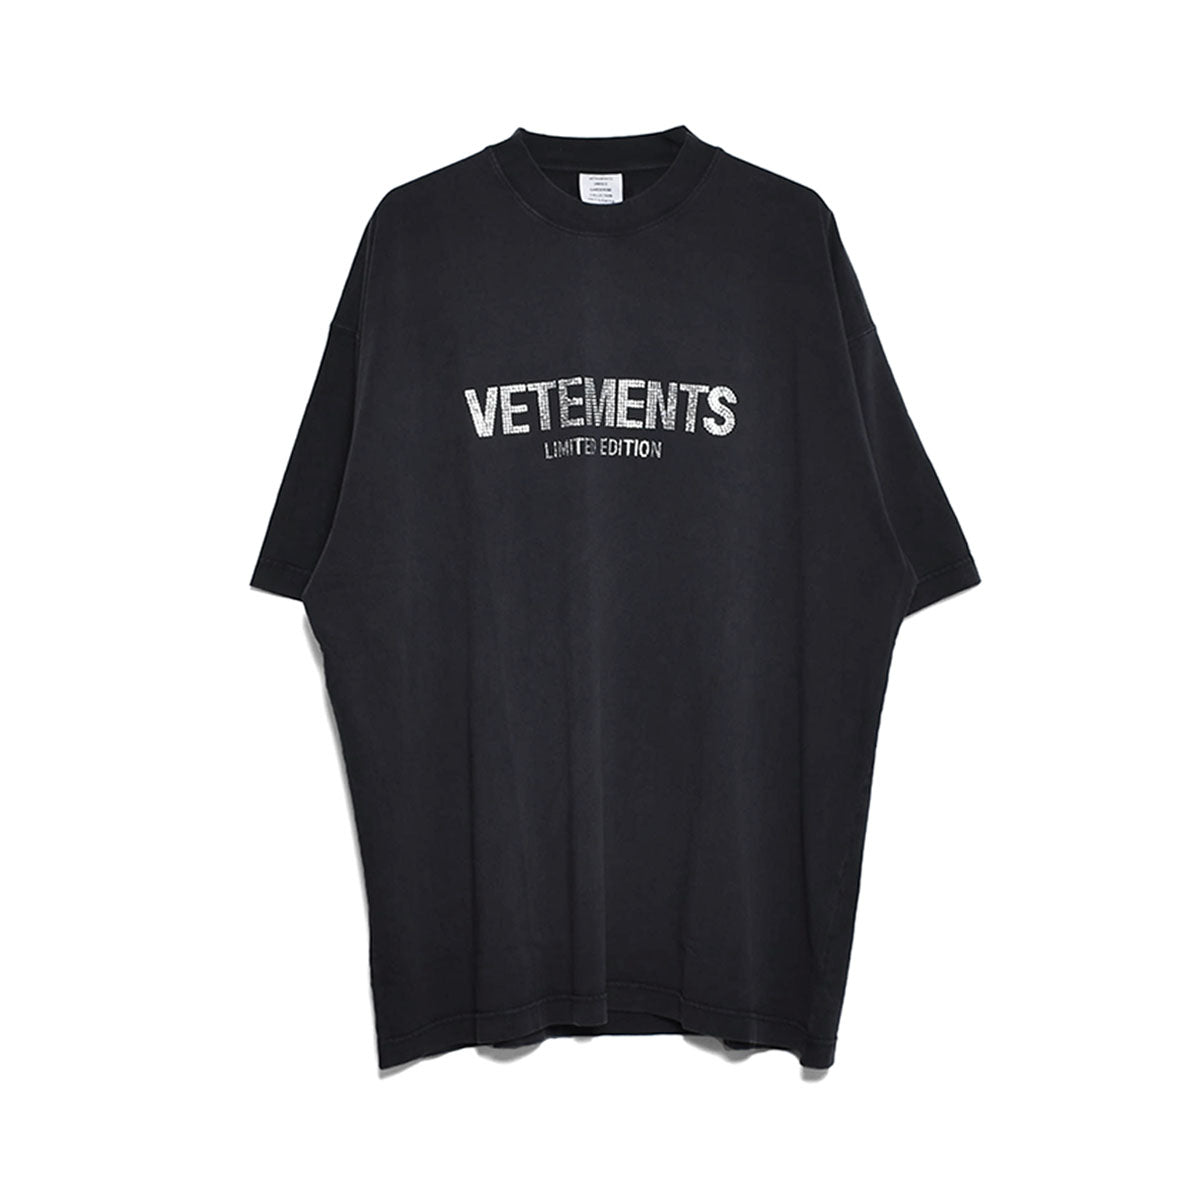 VETEMENTS (ヴェトモン) - R&Co. 公式通販